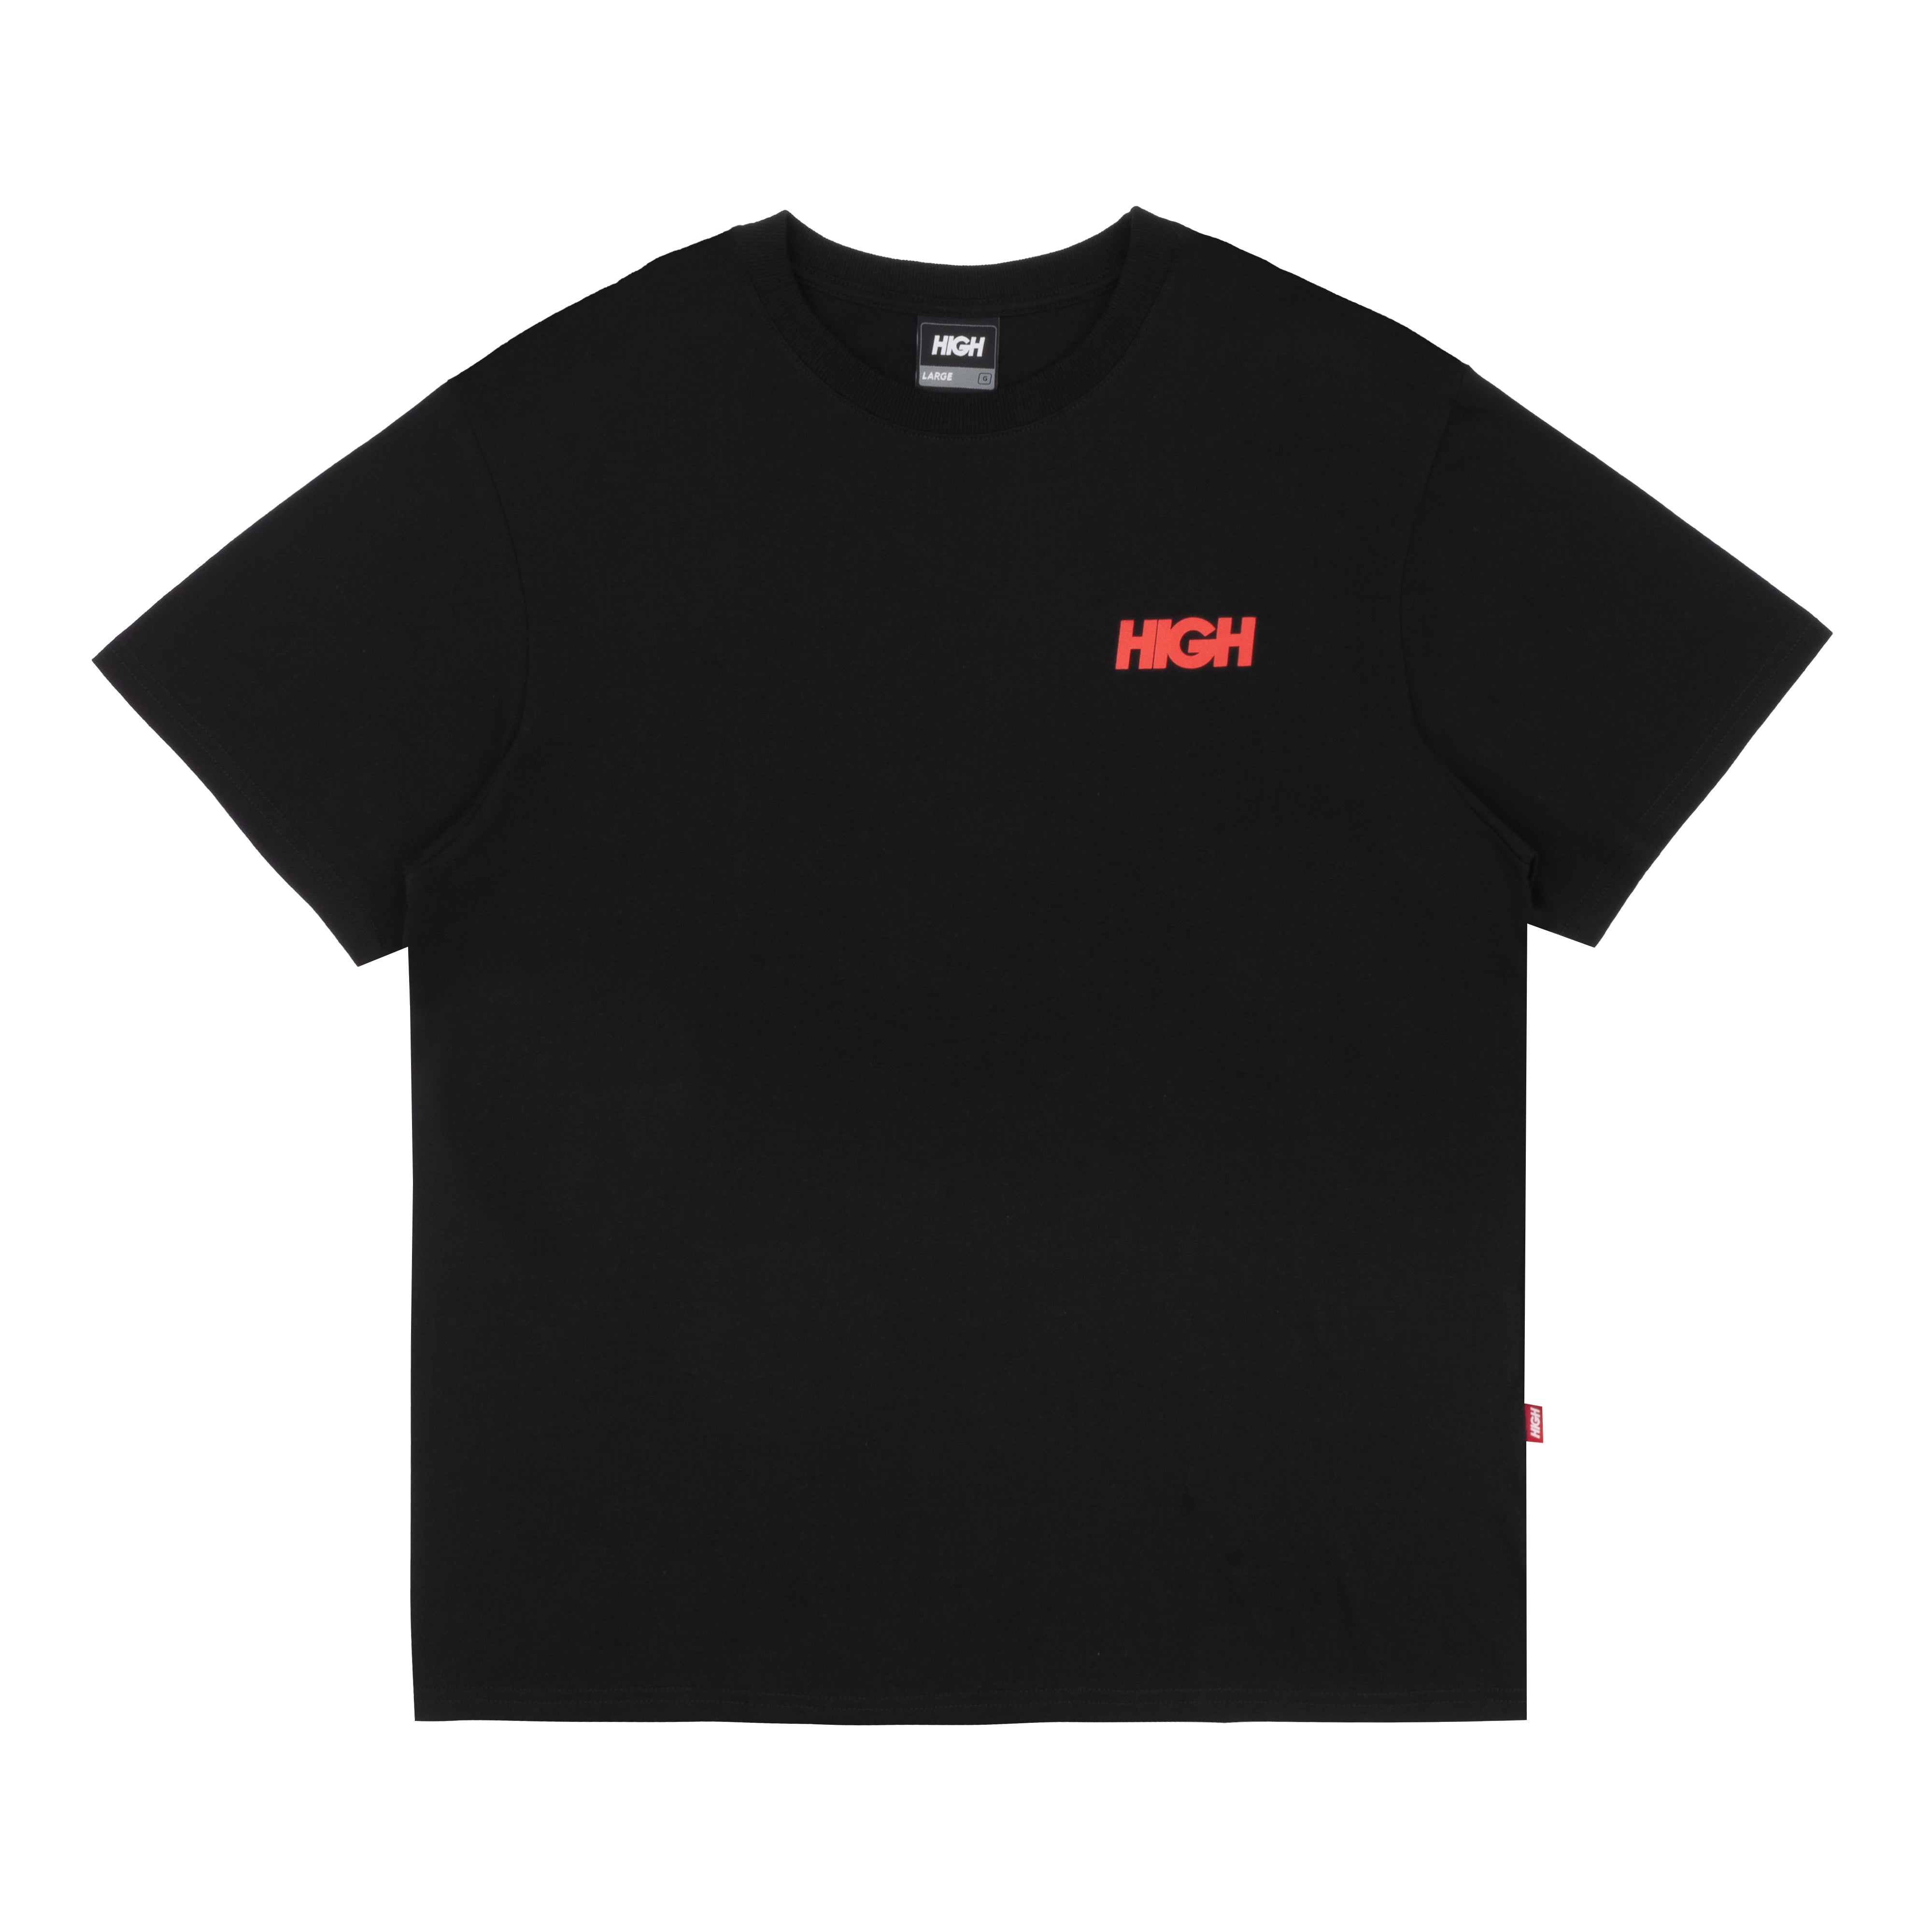 HIGH - Camiseta Cards Black